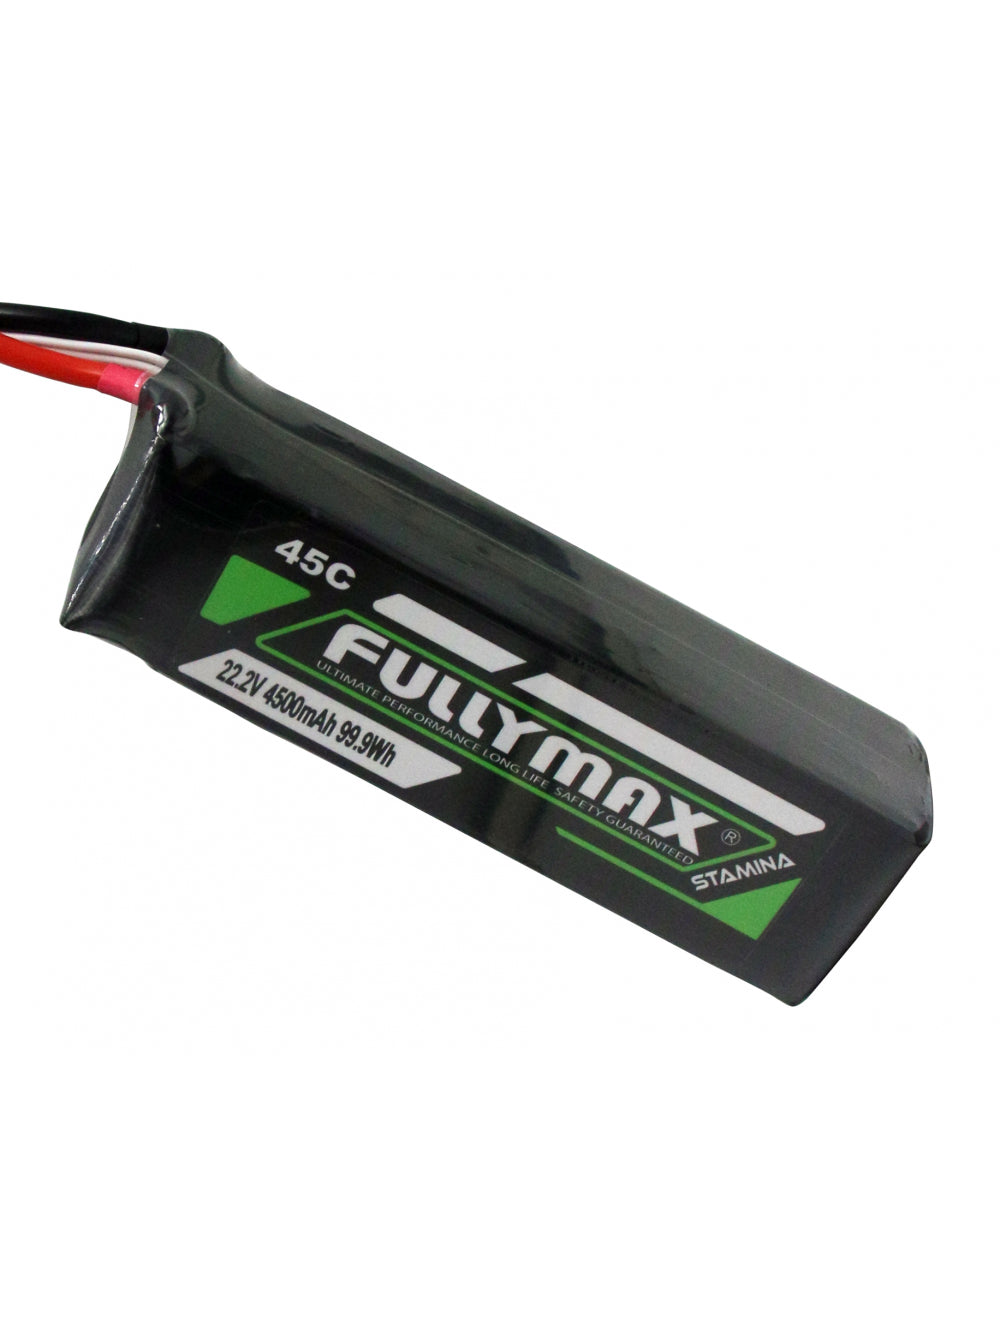 Overlander Fullymax 4500mAh 22.2V 6S 45C LiPo Battery - Deans Connector 3446